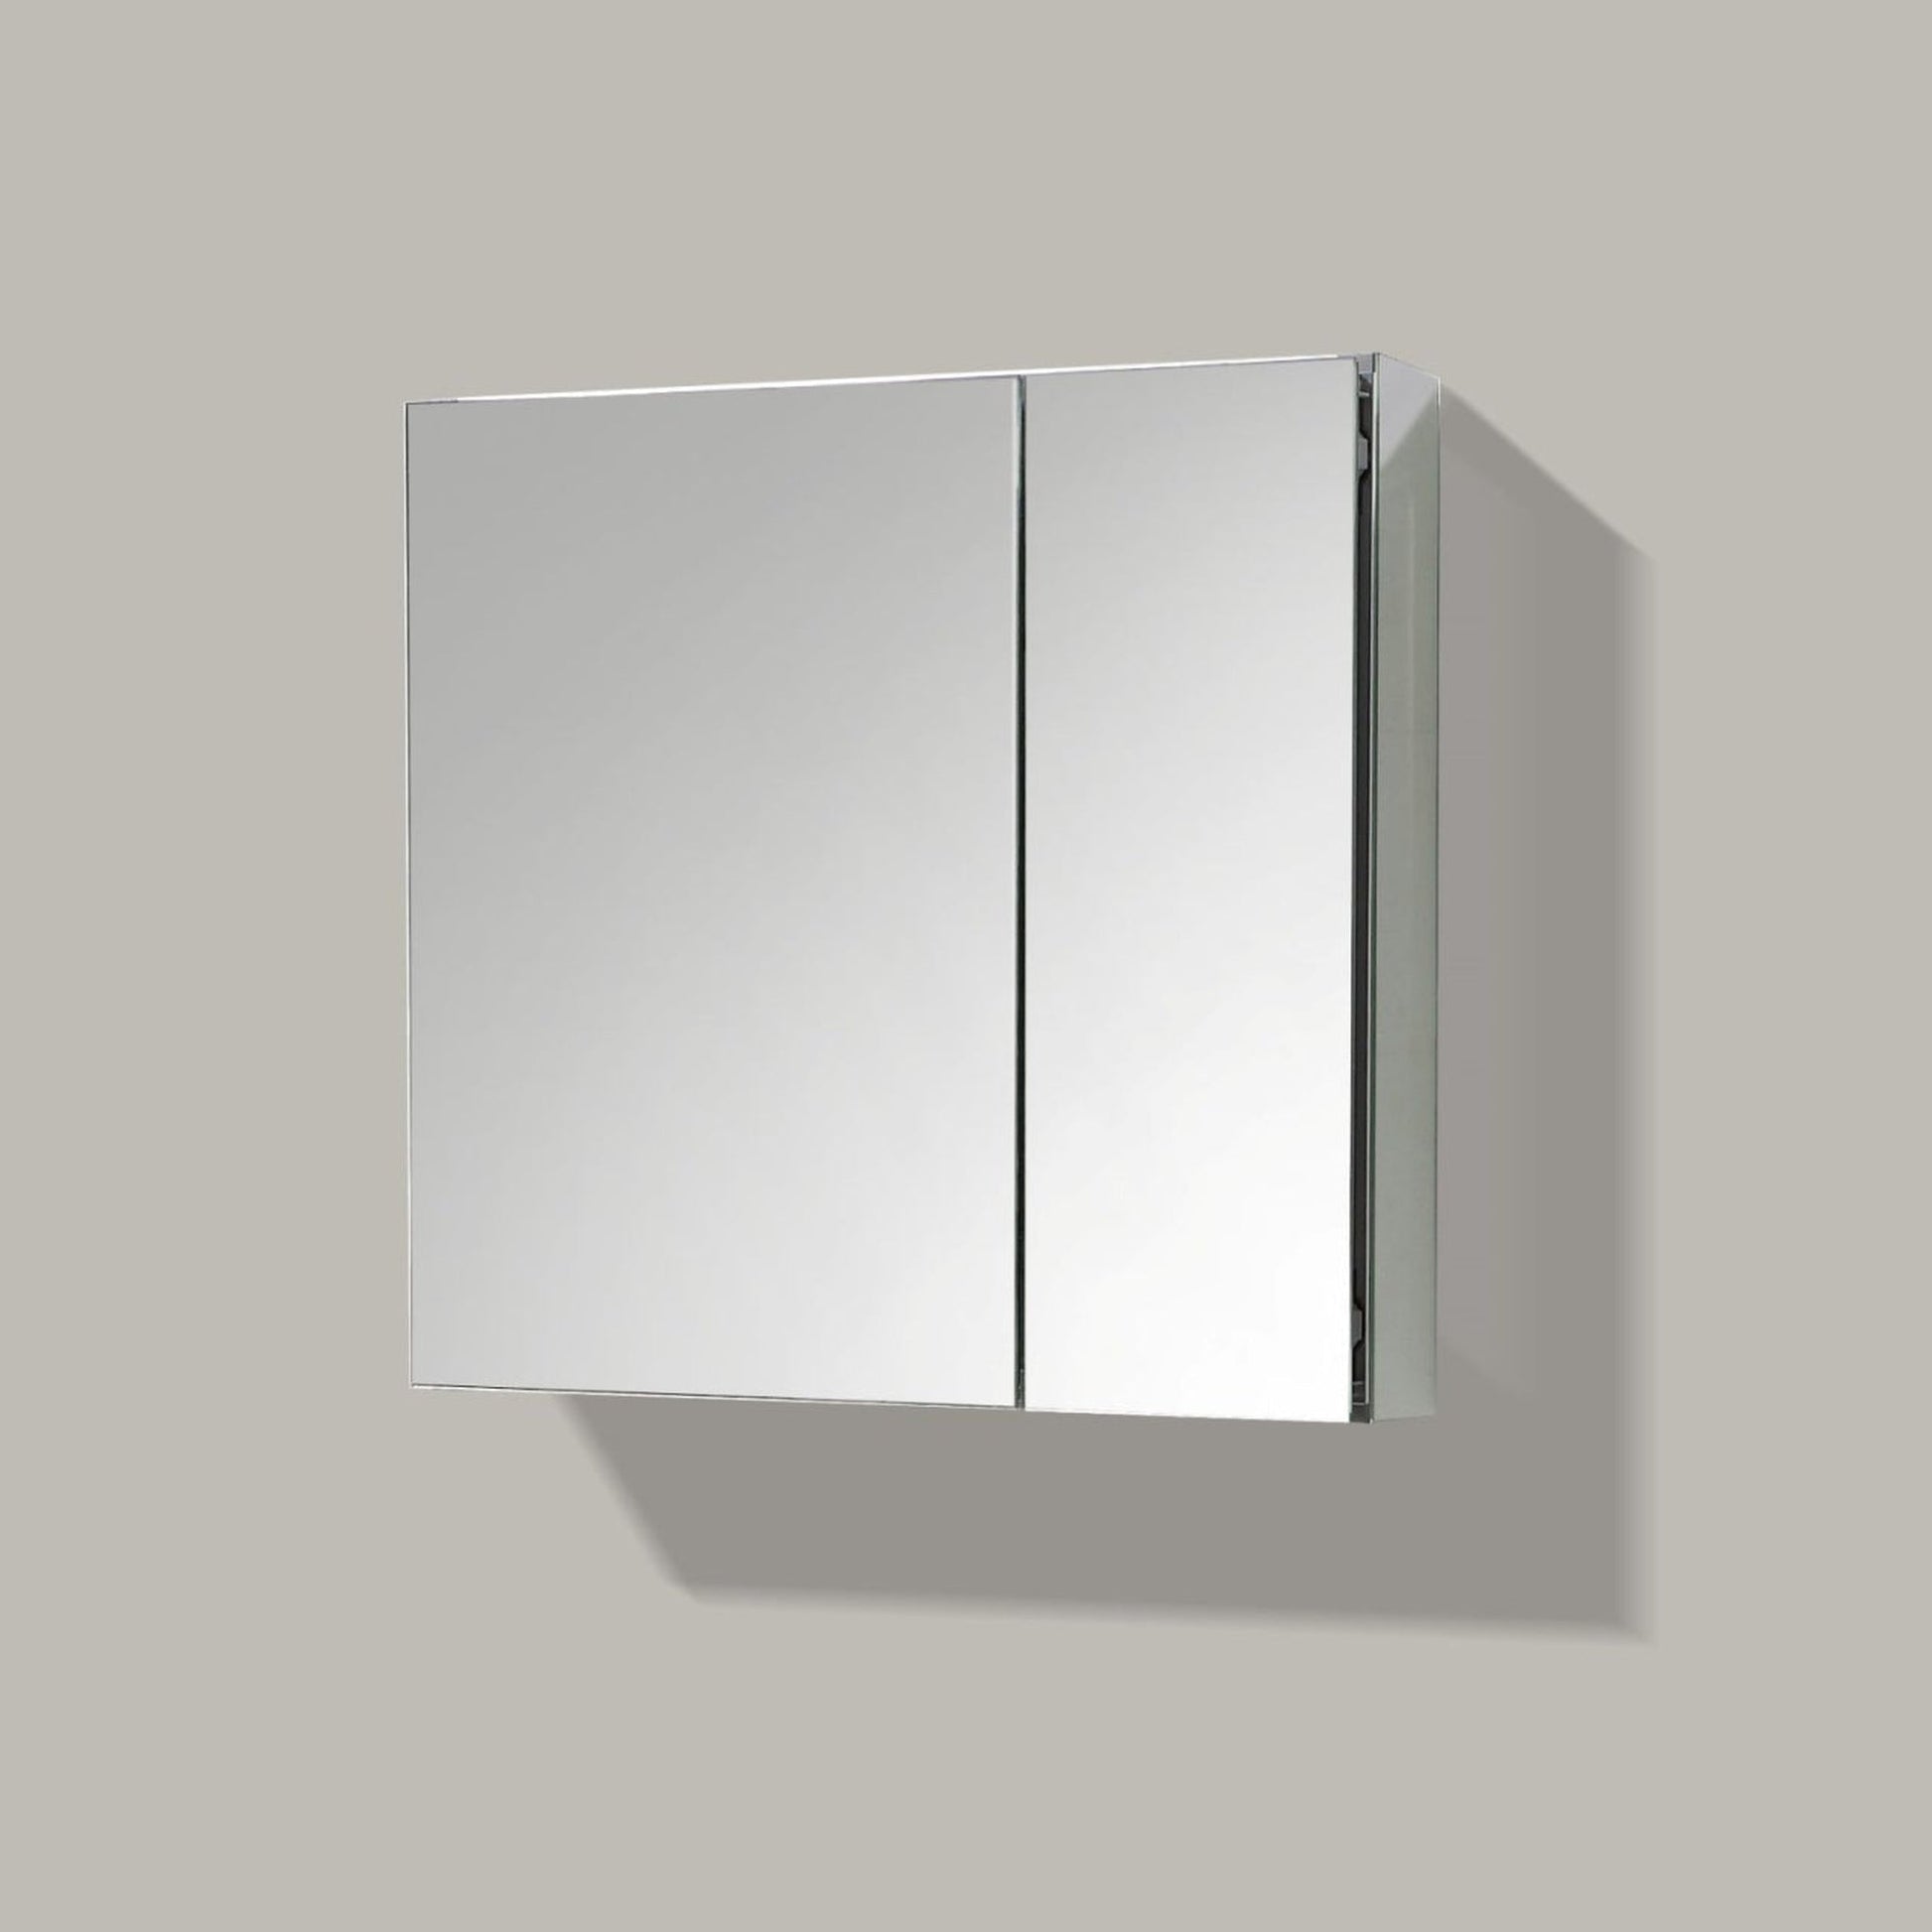 KubeBath Kube Medicine Cabinets 30" x 26" With Mirror For Bathroom